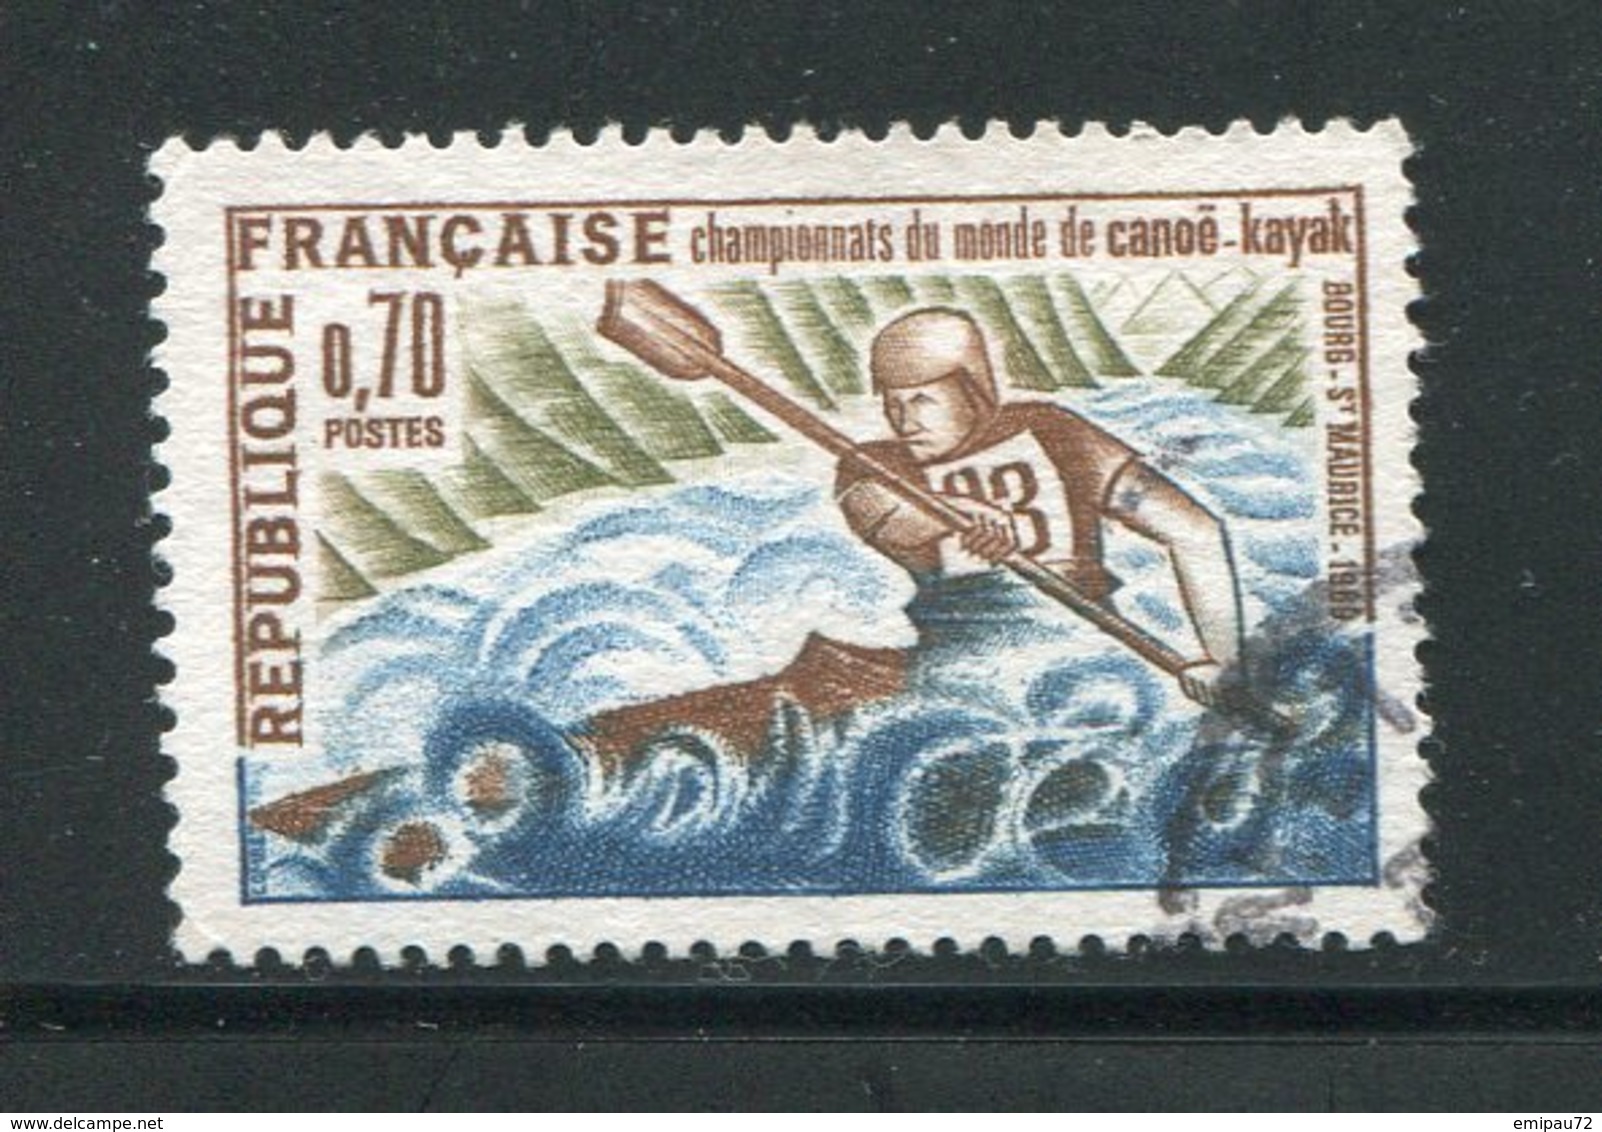 FRANCE- Y&T N°1609- Oblitéré - Kanu